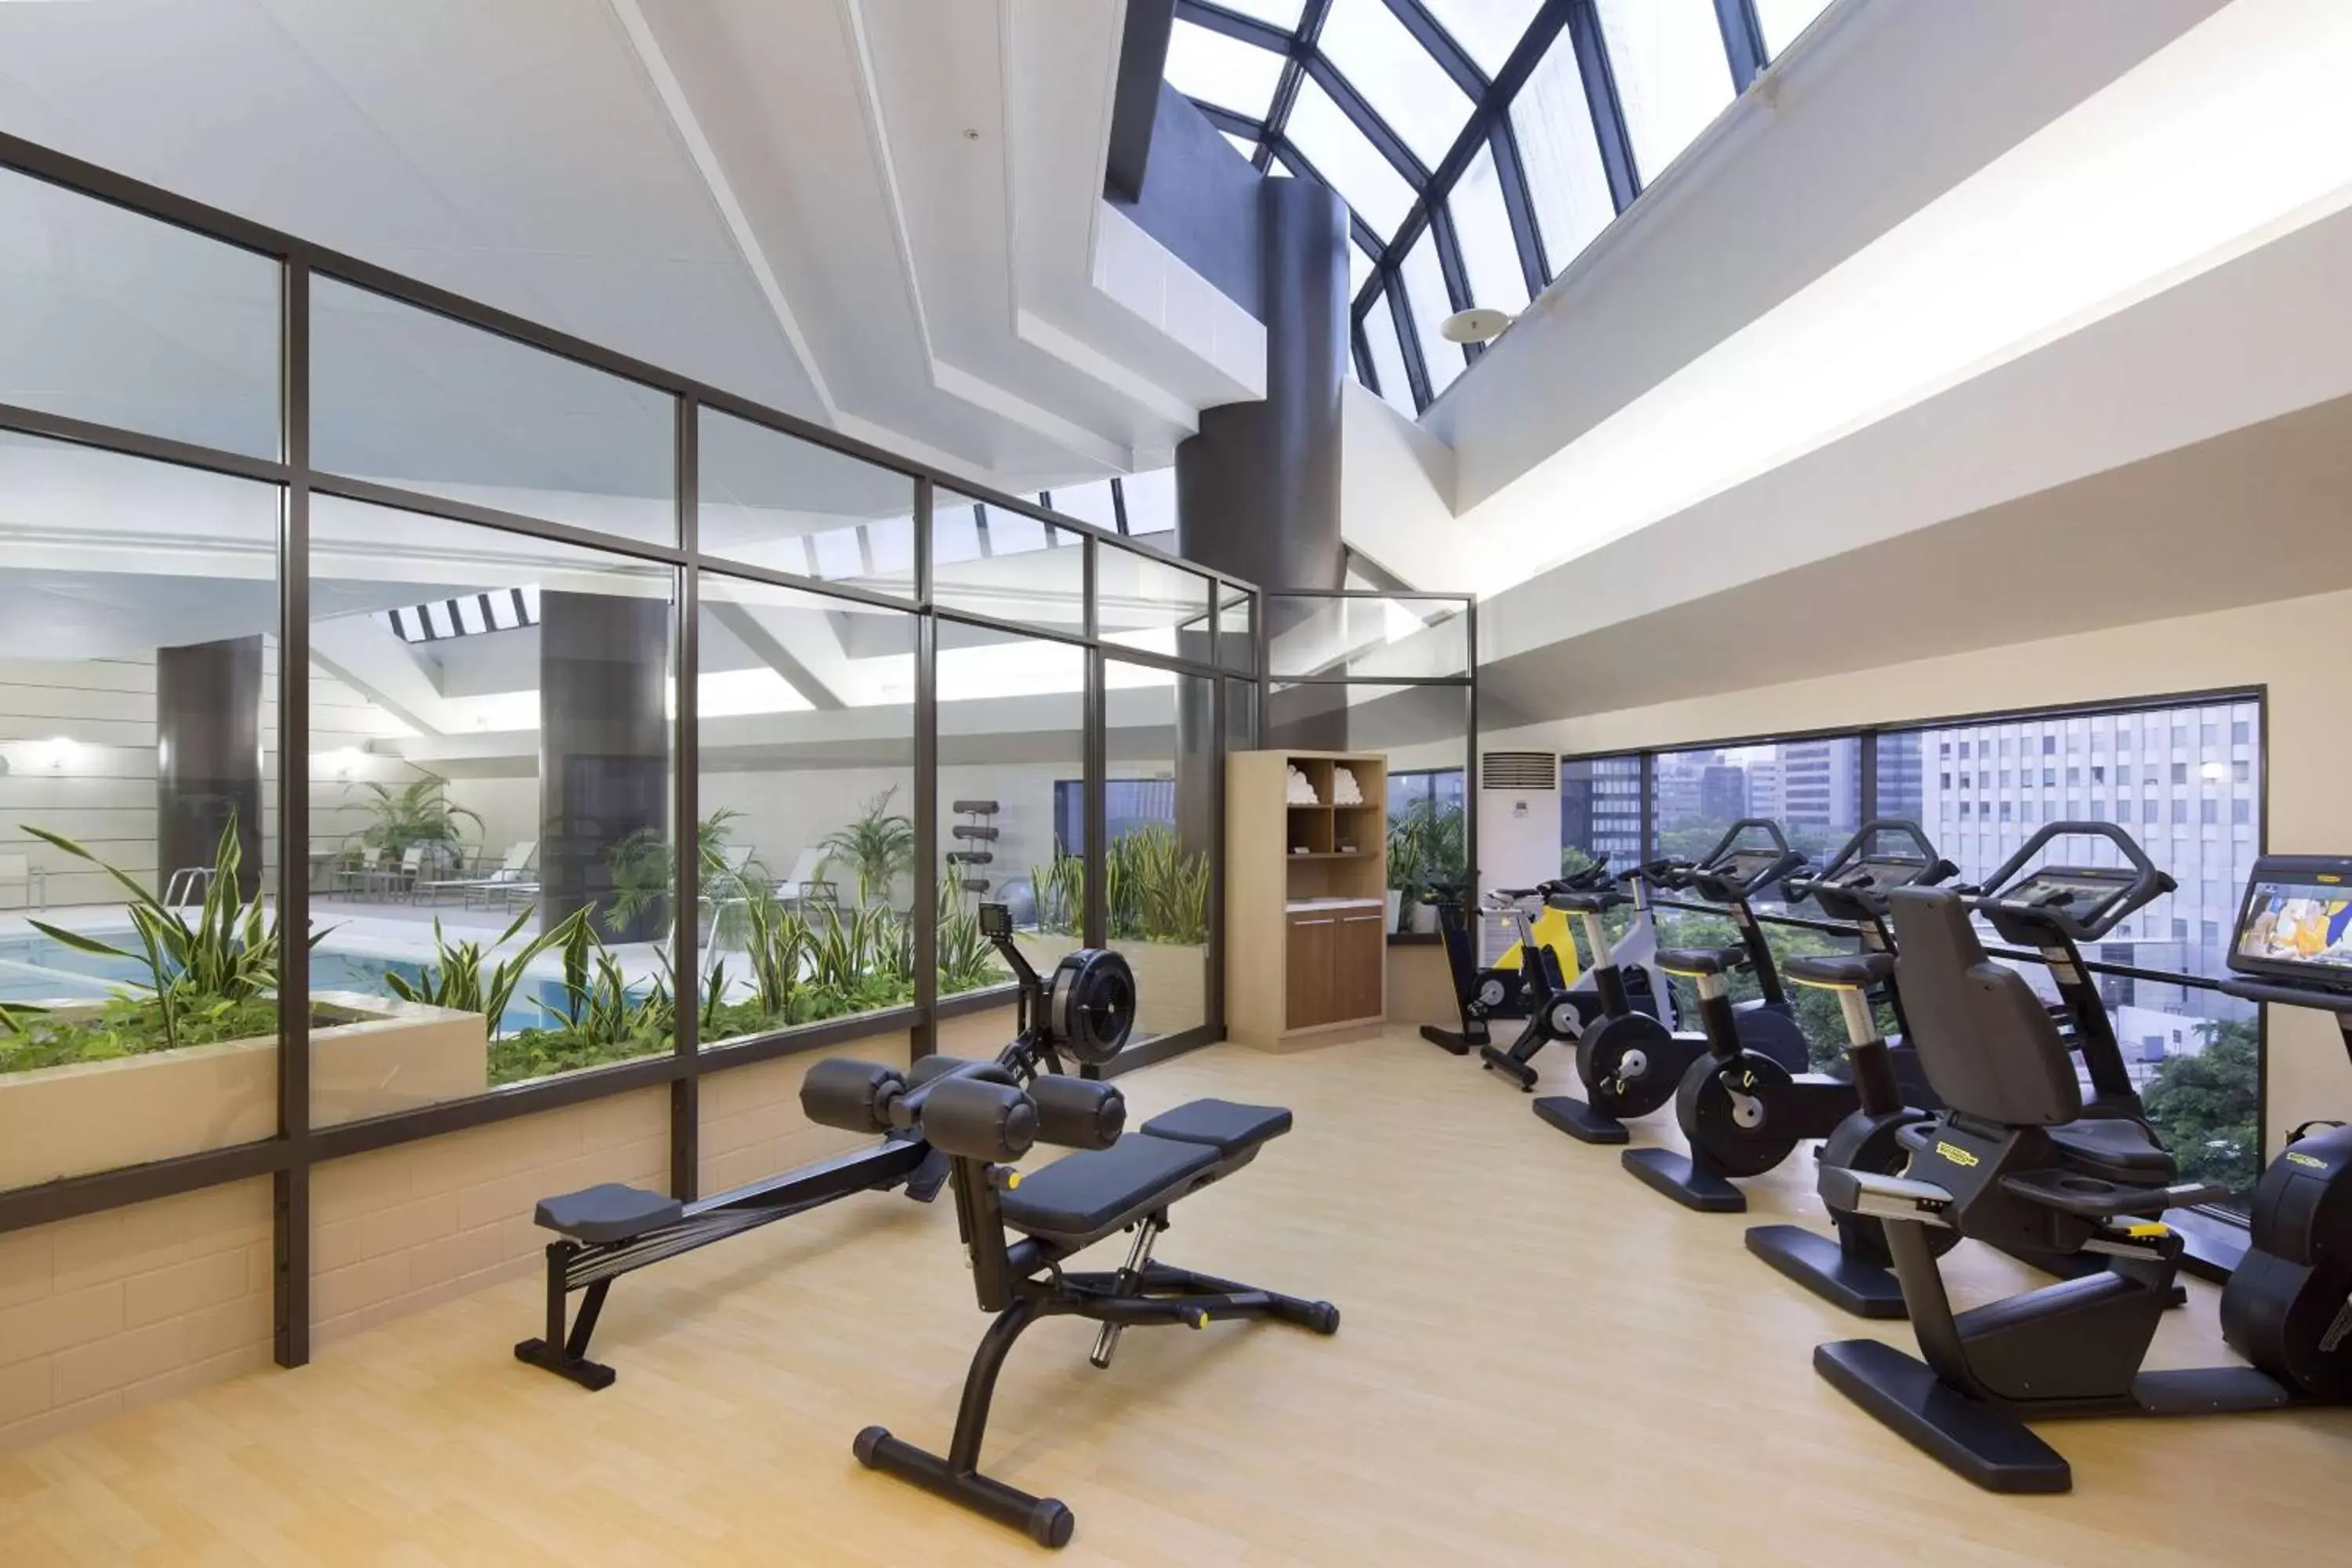 Fitness centre/facilities, Fitness Center/Facilities in Hilton Tokyo Hotel